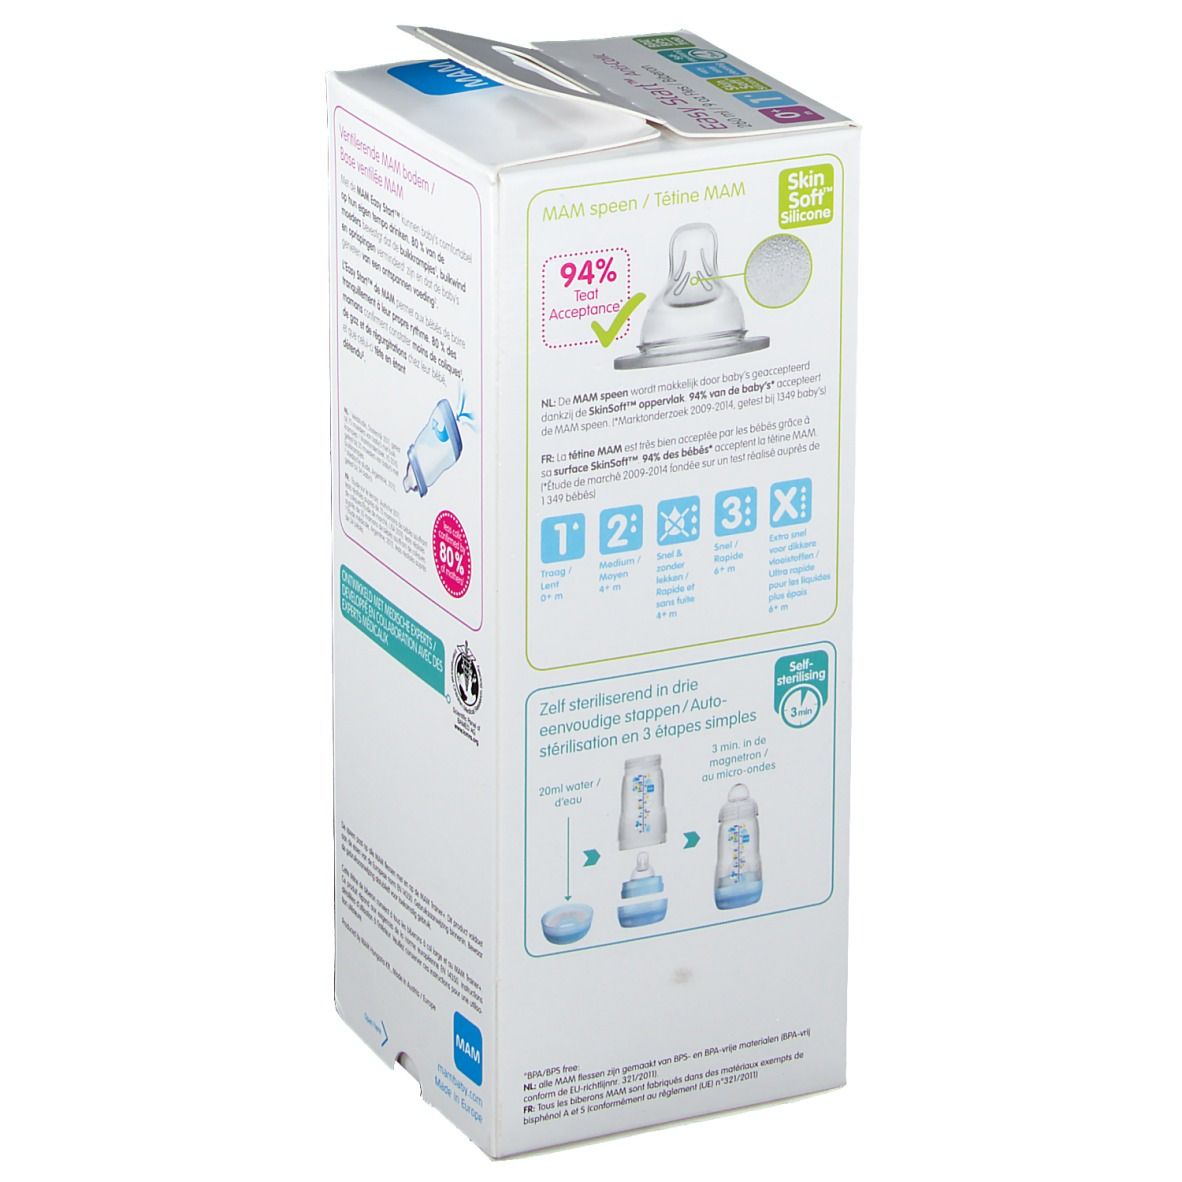  MAM Biberon Easy Start™ anti-colique 260 ml +0 mois (Couleur non selectionnable)